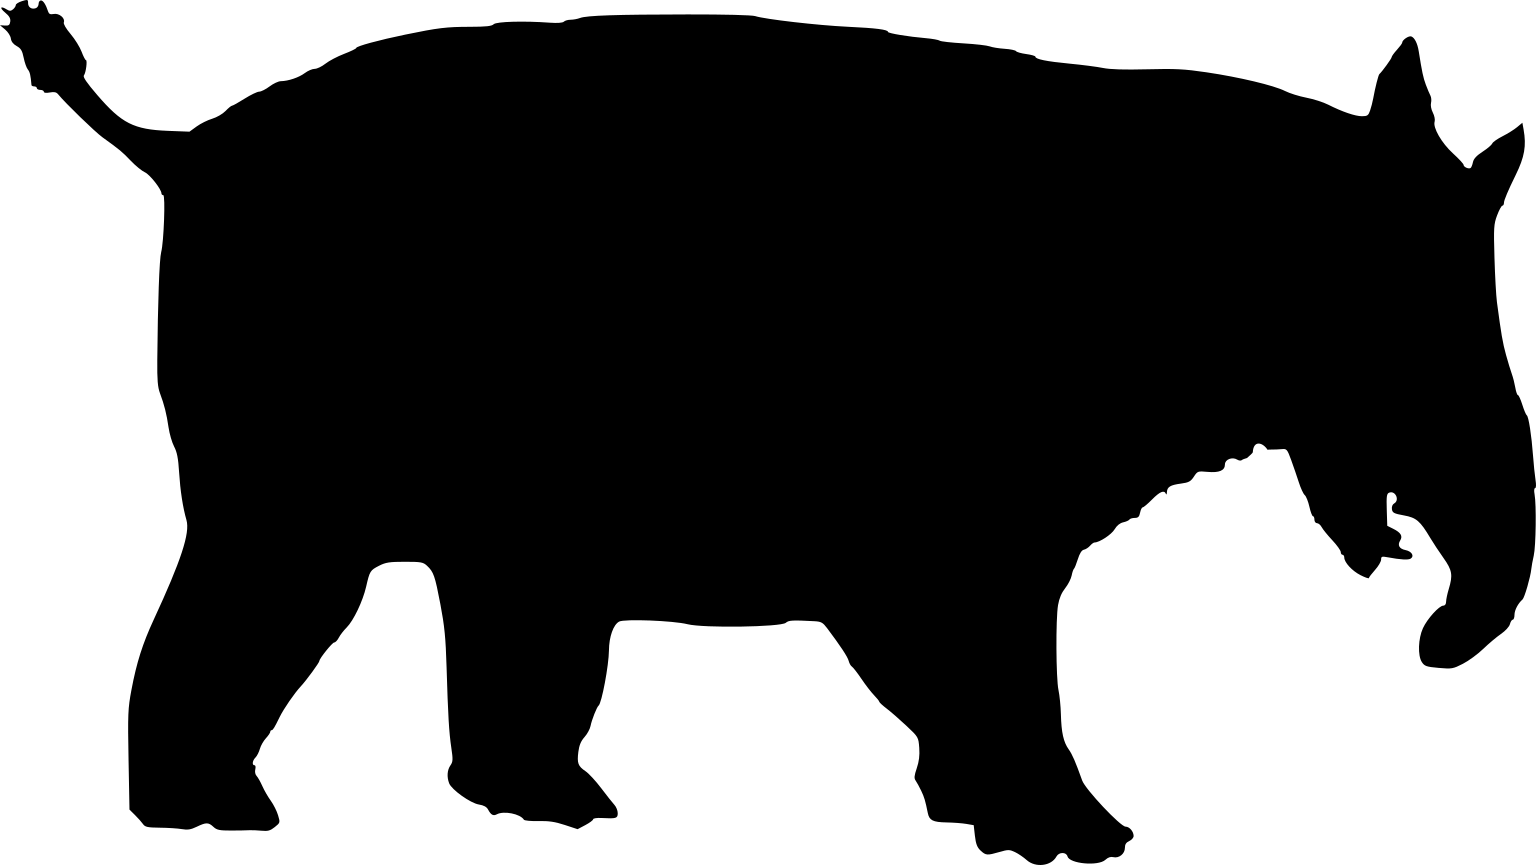 Parastrapotherium holmbergi